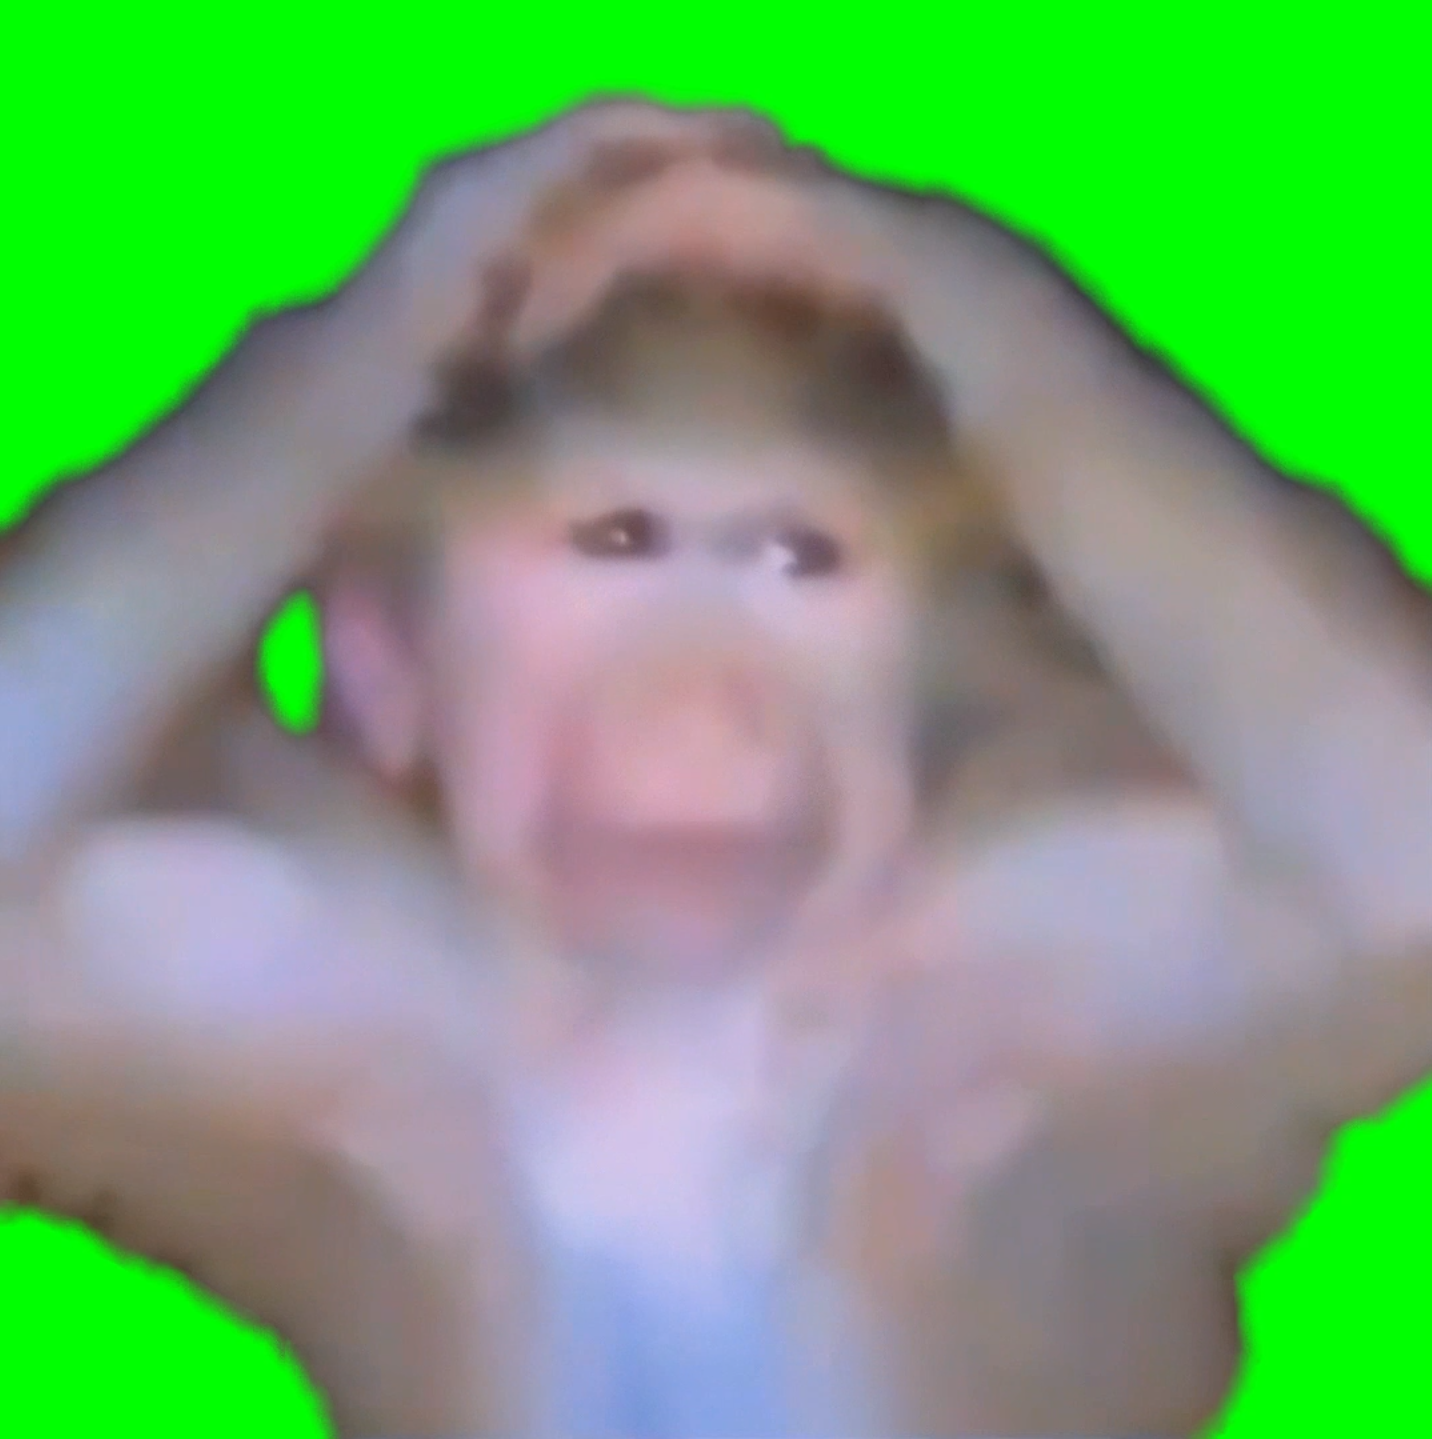 Sad Monkey hands on Top of Head meme (Green Screen)